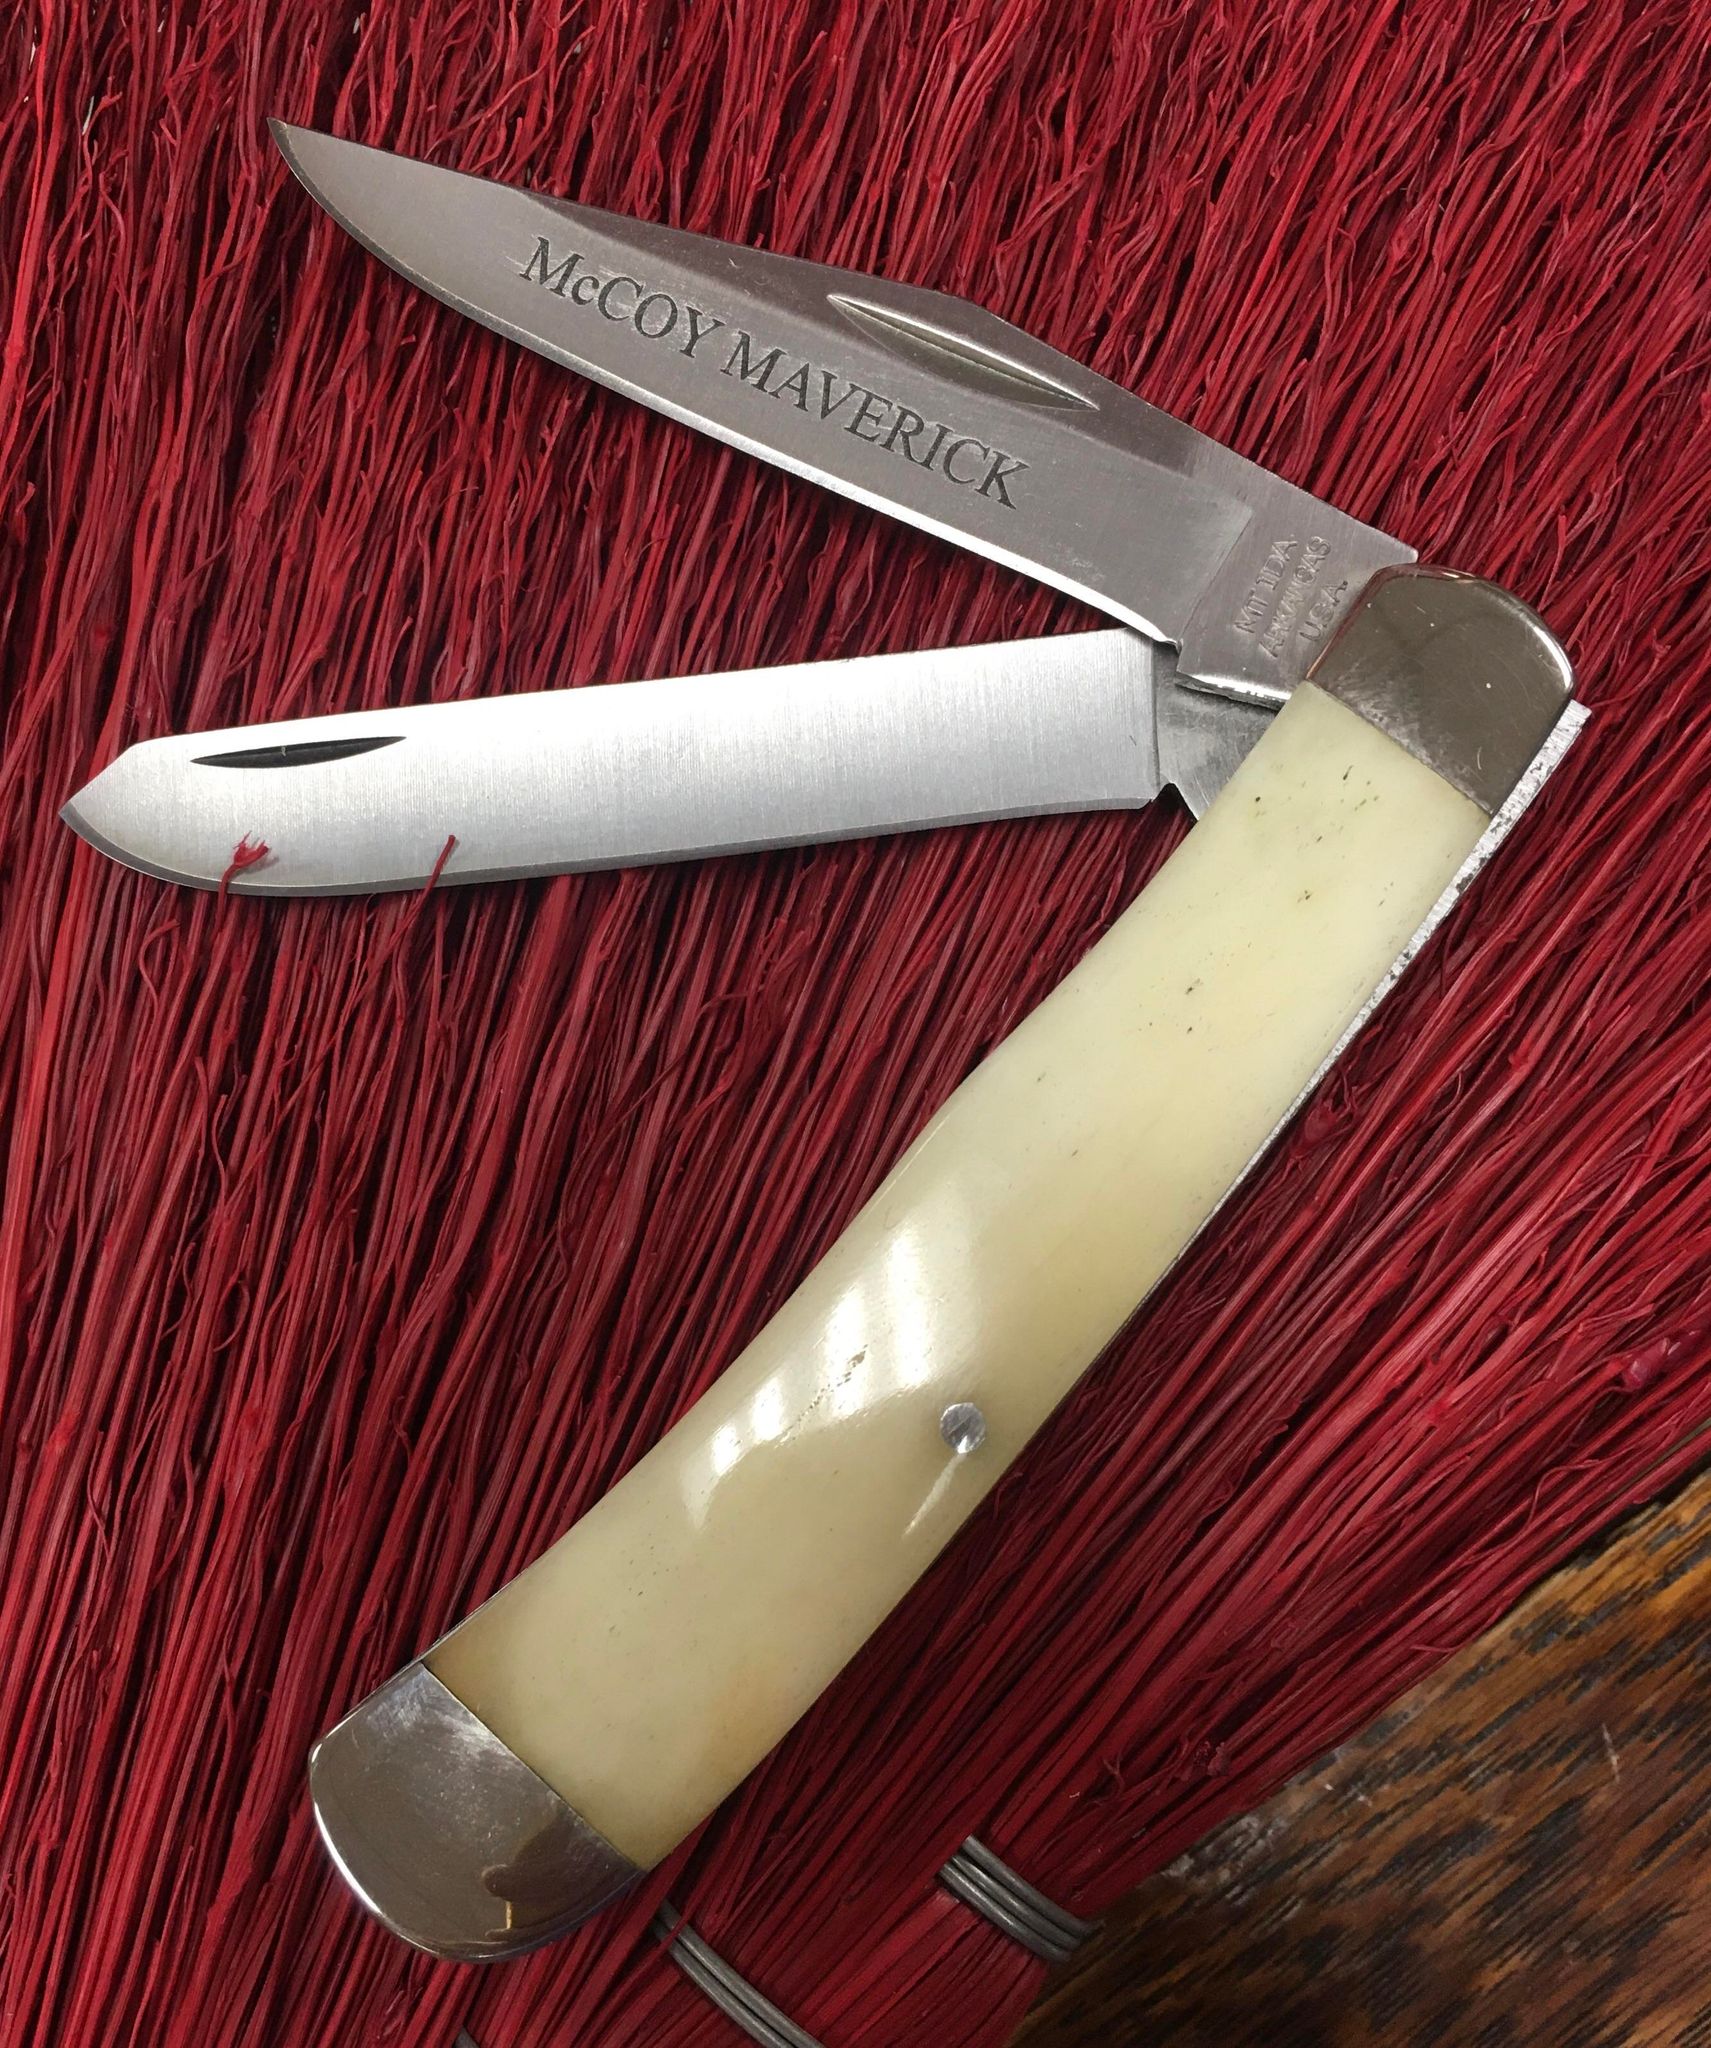 The McCoy Maverick Knife has a smooth ivory handle.